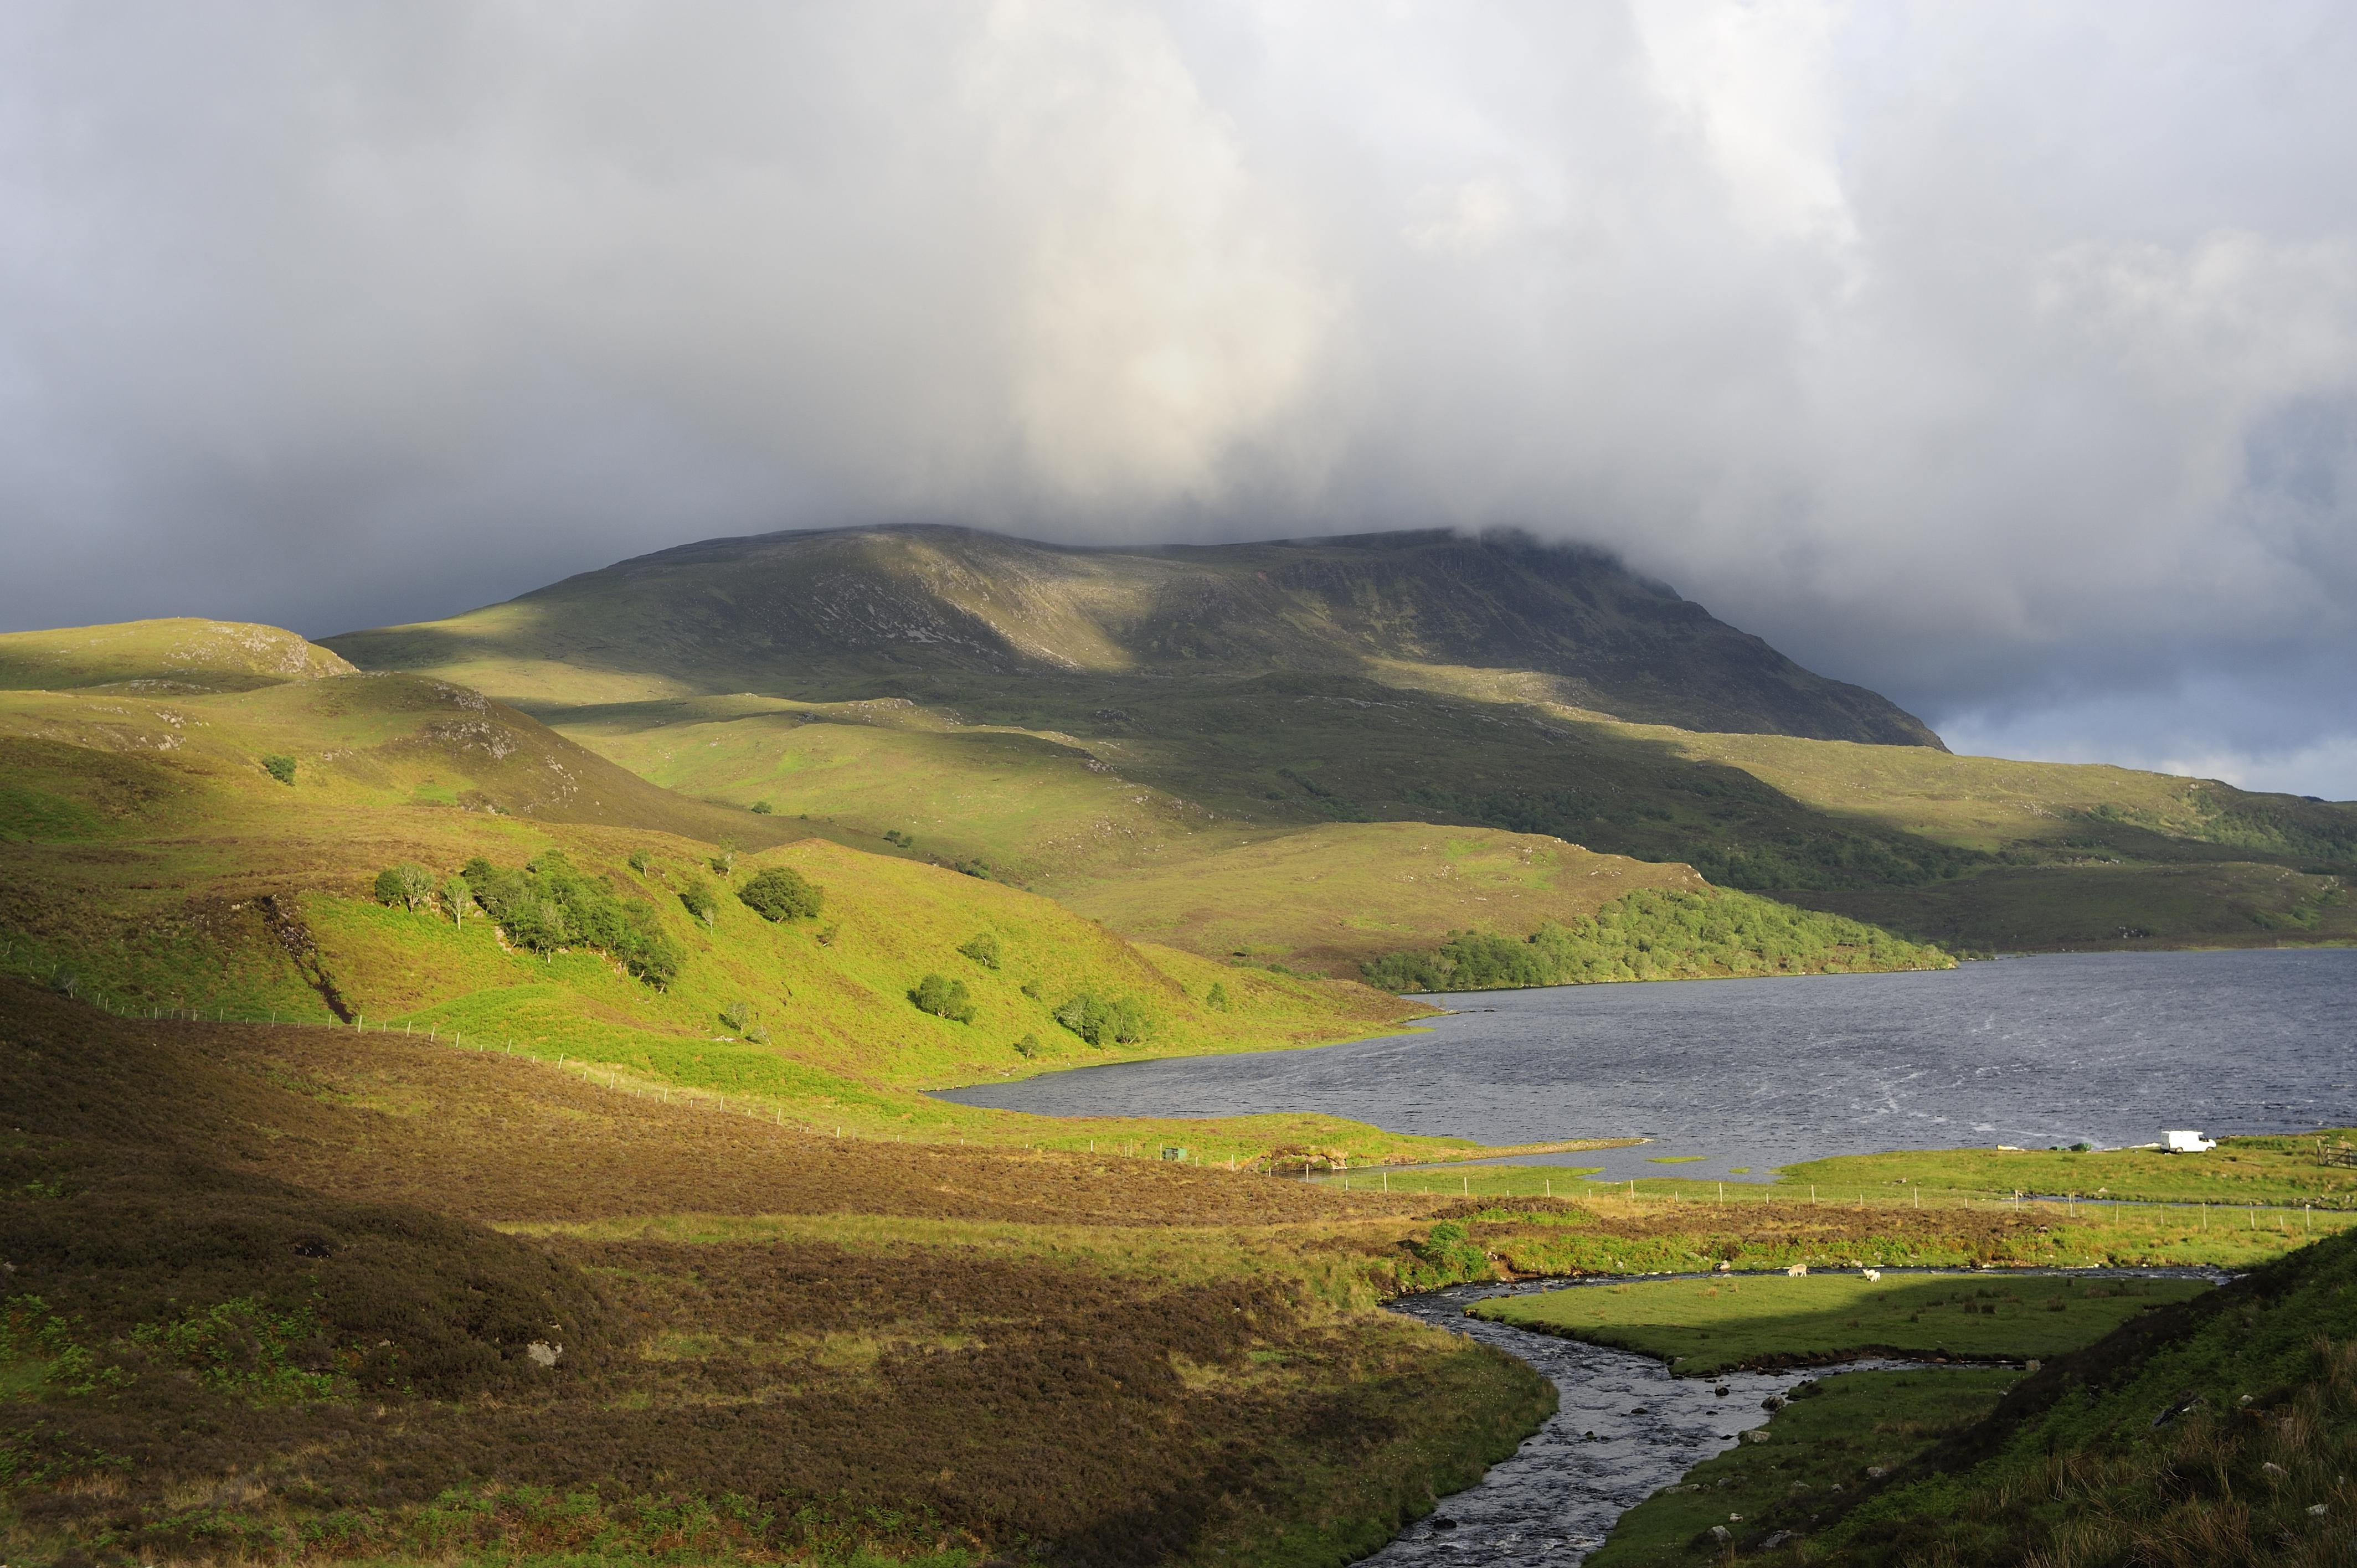 Cùl Mòr from Loch Veyatie